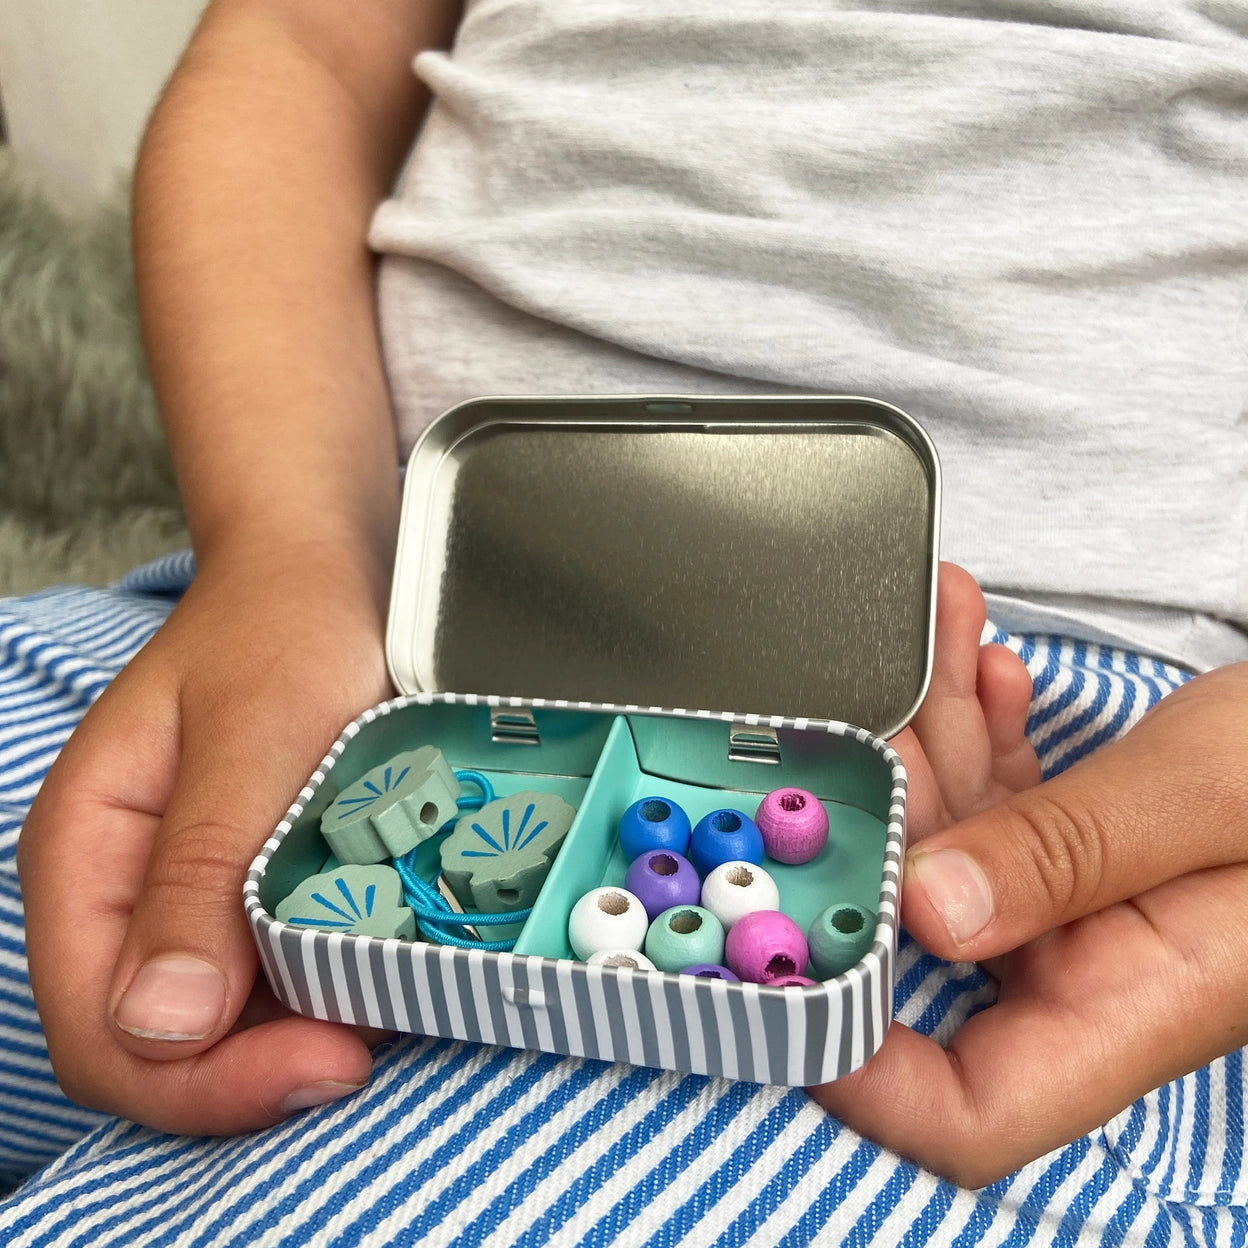 Rainbow, Mermaid or Daisy Bracelet Making Kits in Gift Tins